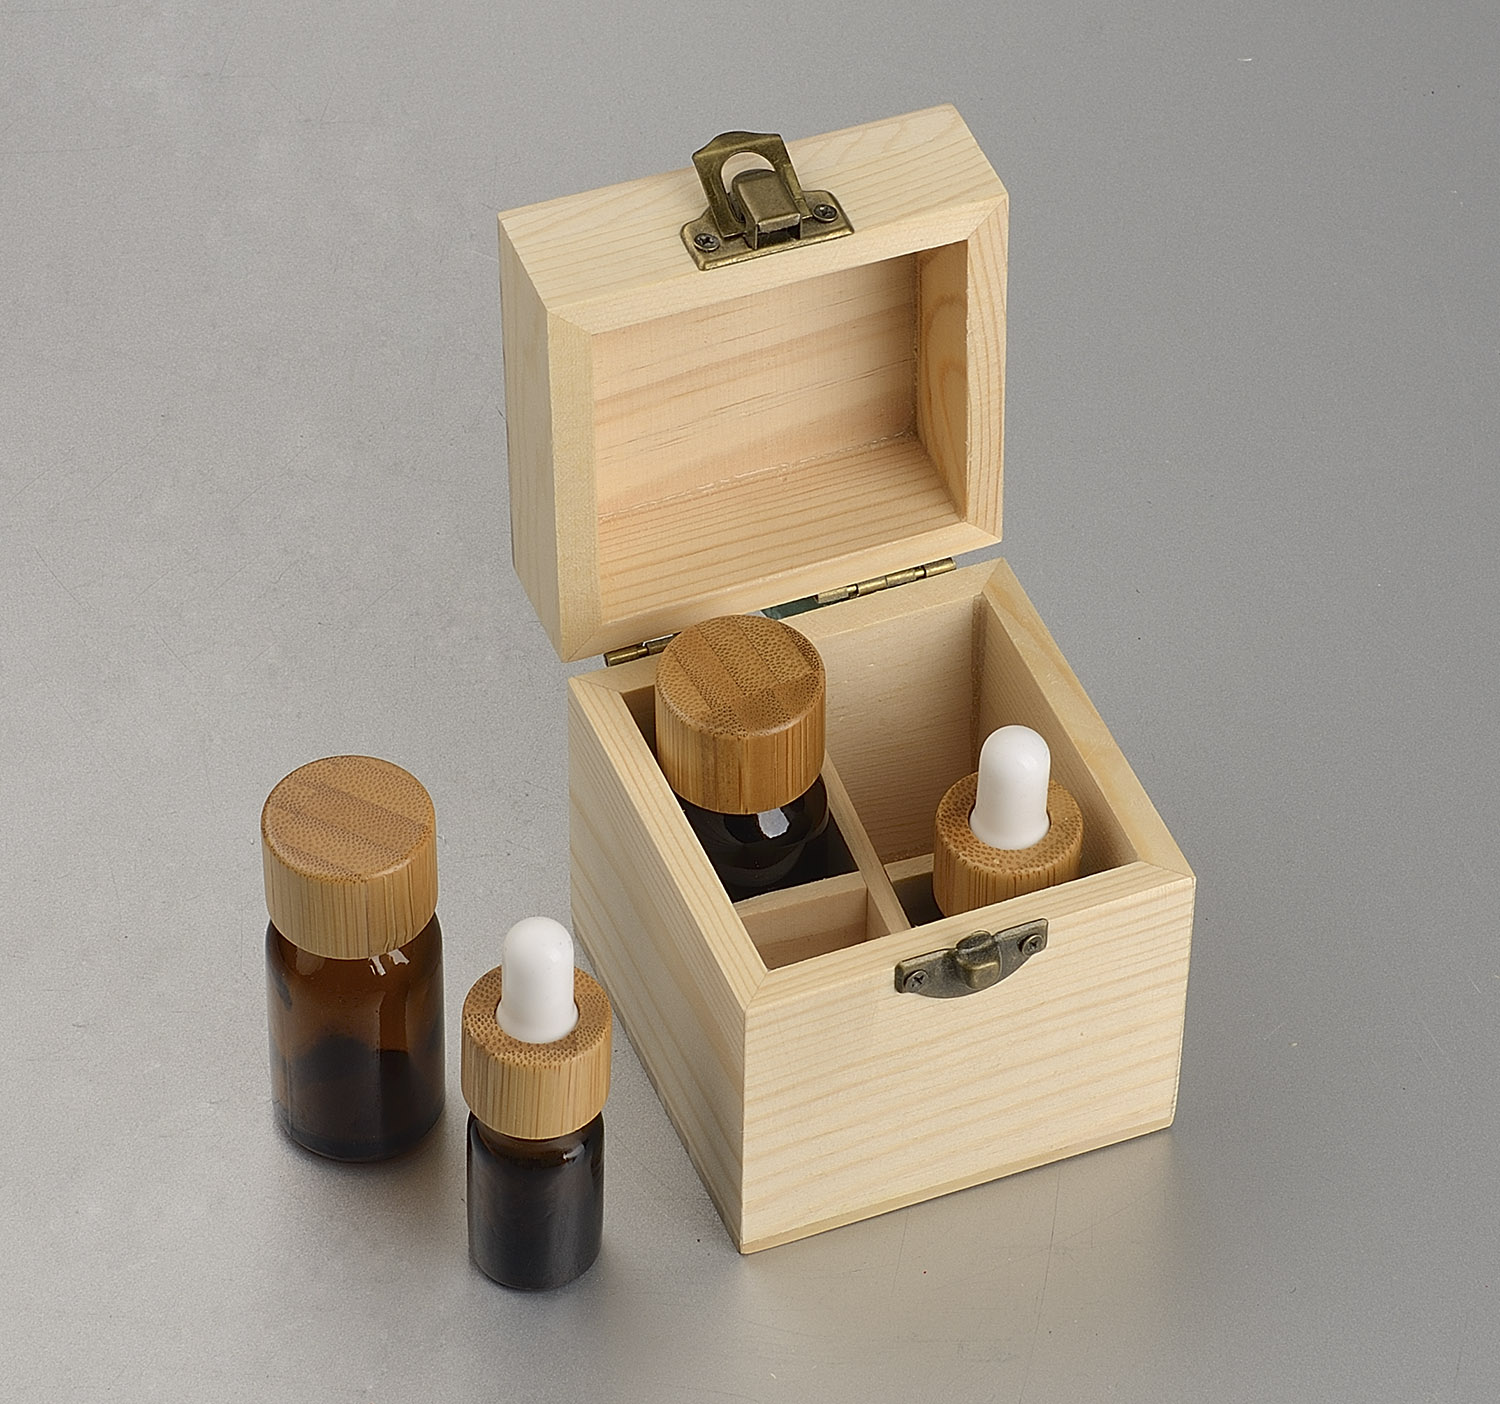 Essential Oil Wooden Box